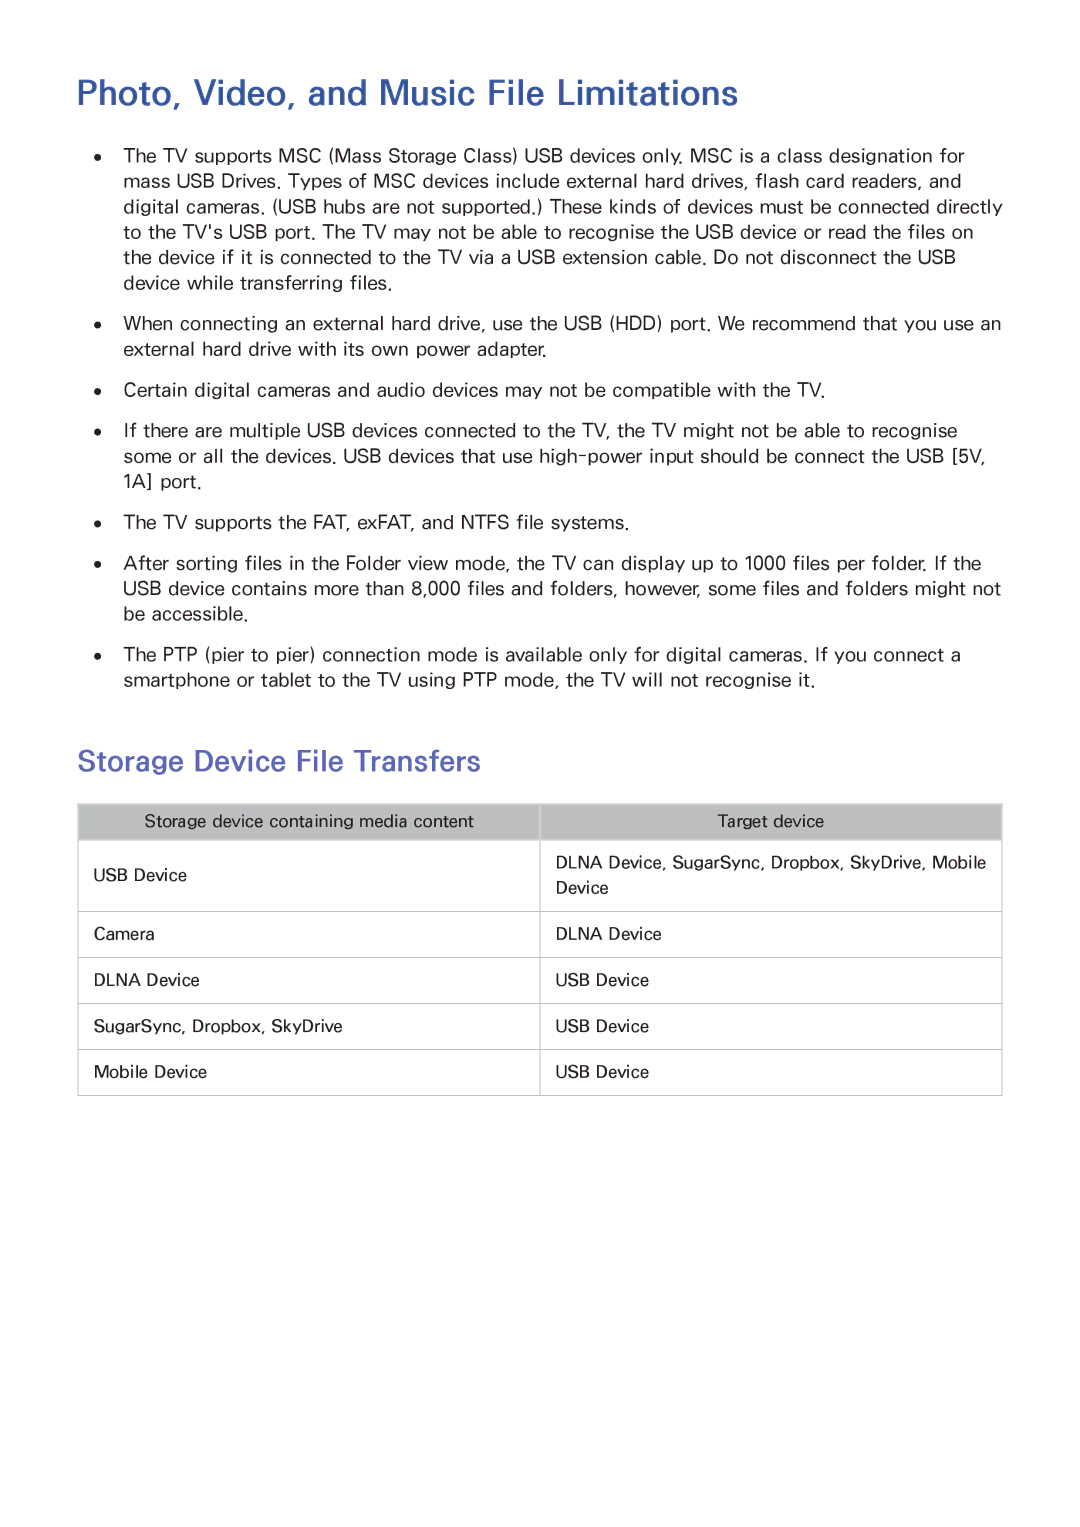 Samsung UE48H6590SVXZG, UE40H6620SVXZG manual Photo, Video, and Music File Limitations, Storage Device File Transfers 